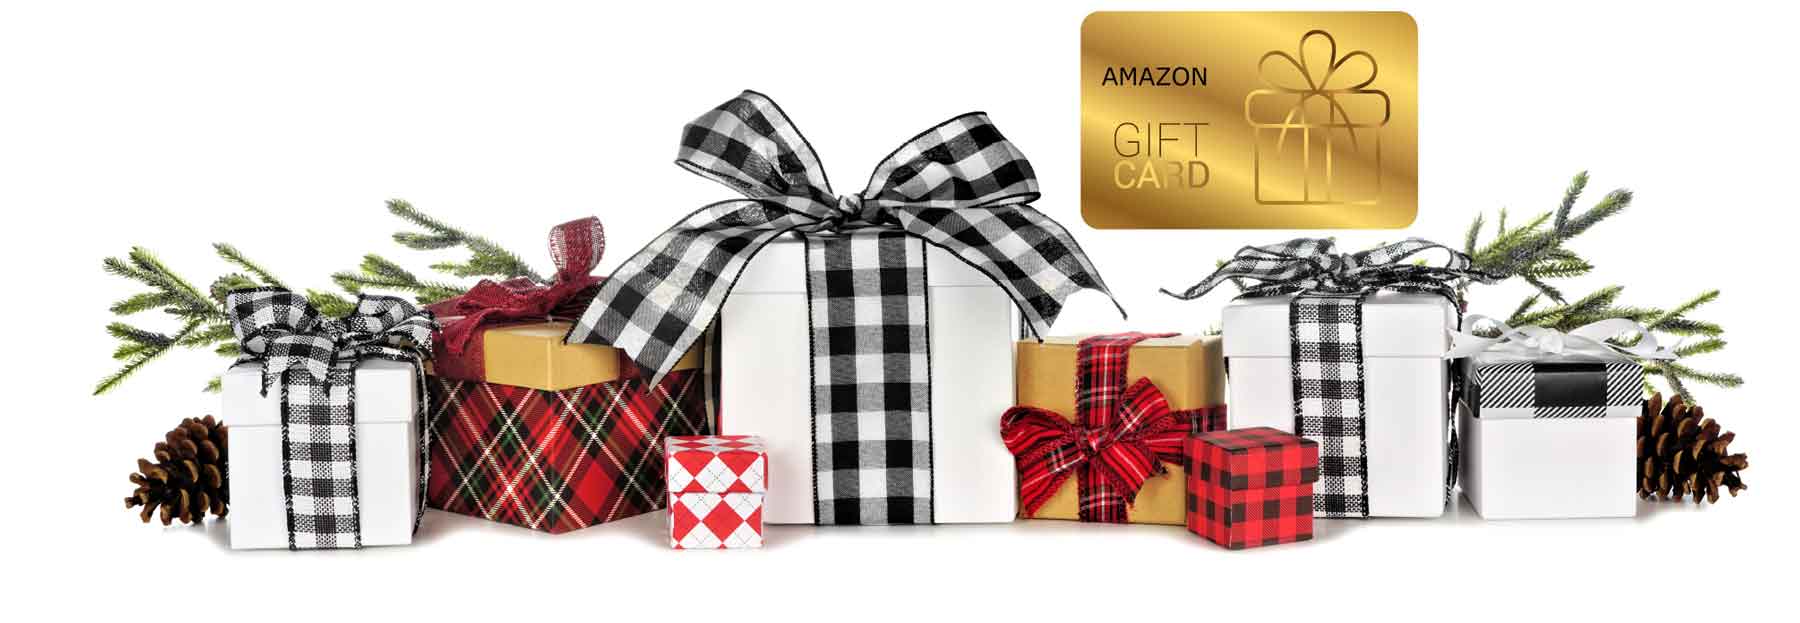 Holiday Giveaway - Amazon Gift Card